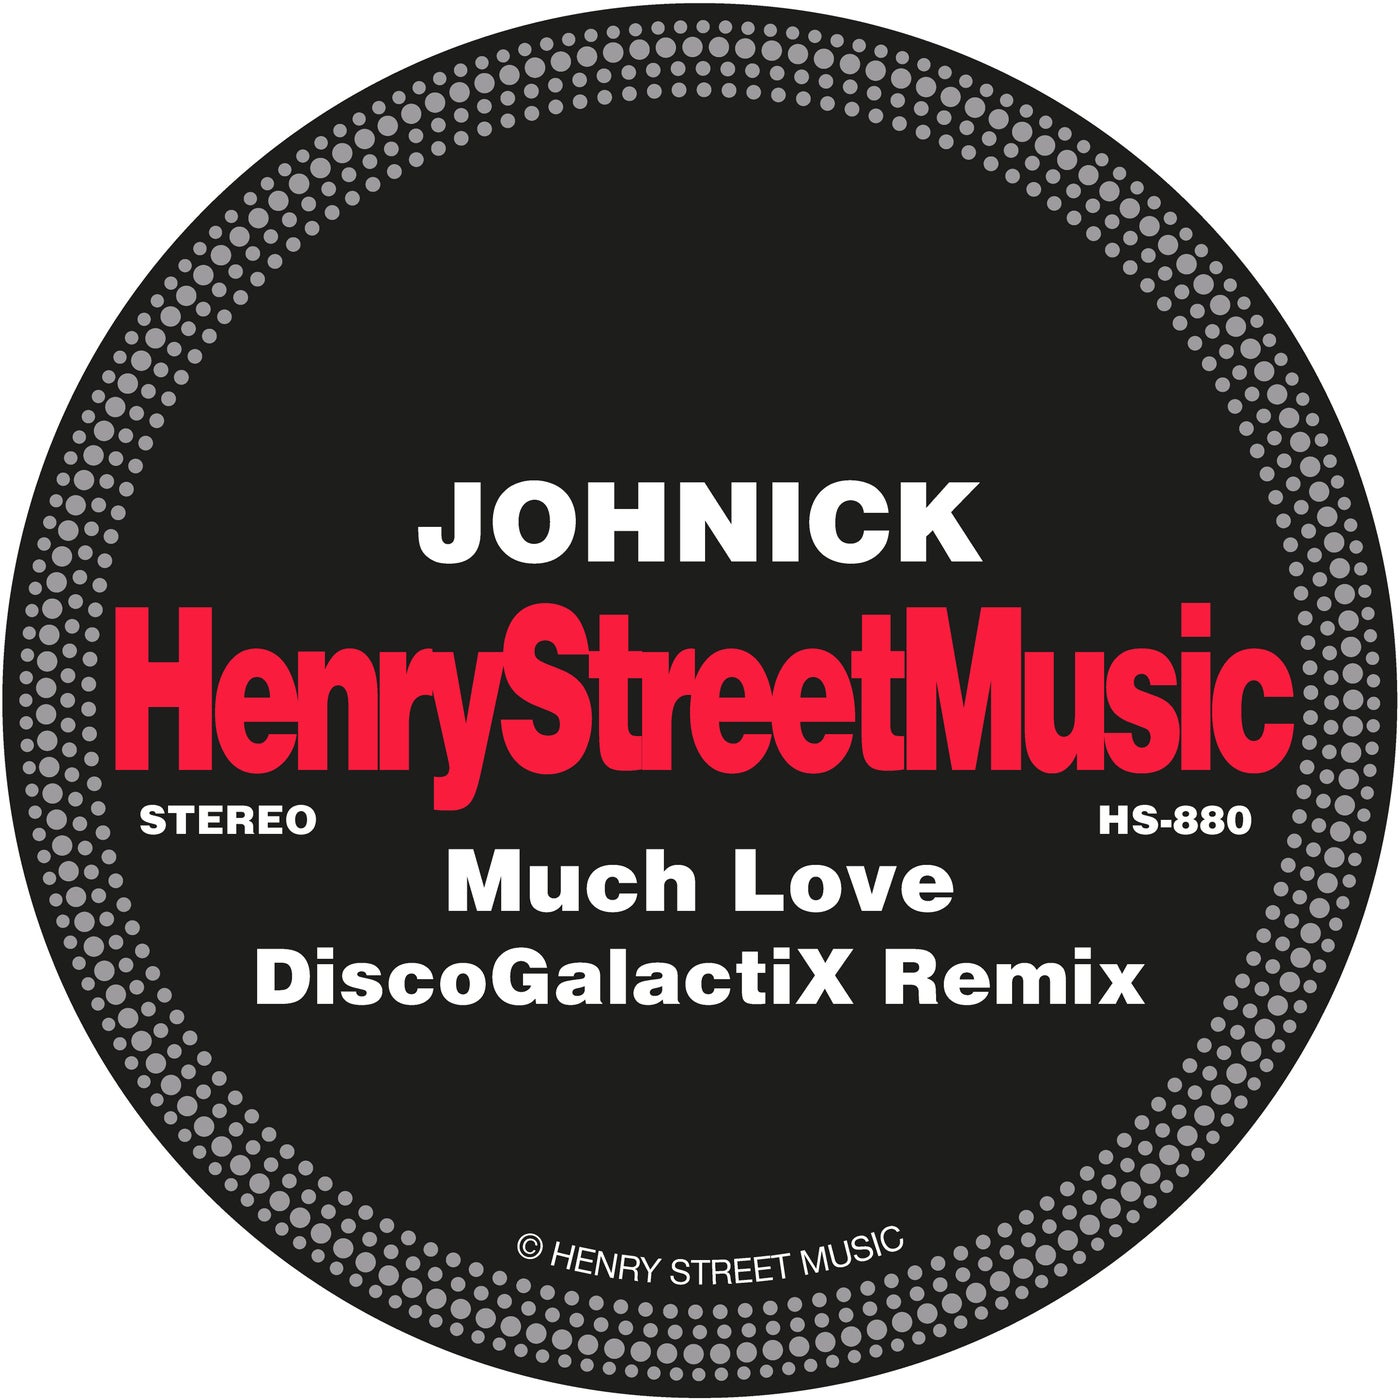 Much Love - DiscoGalactiX Remix